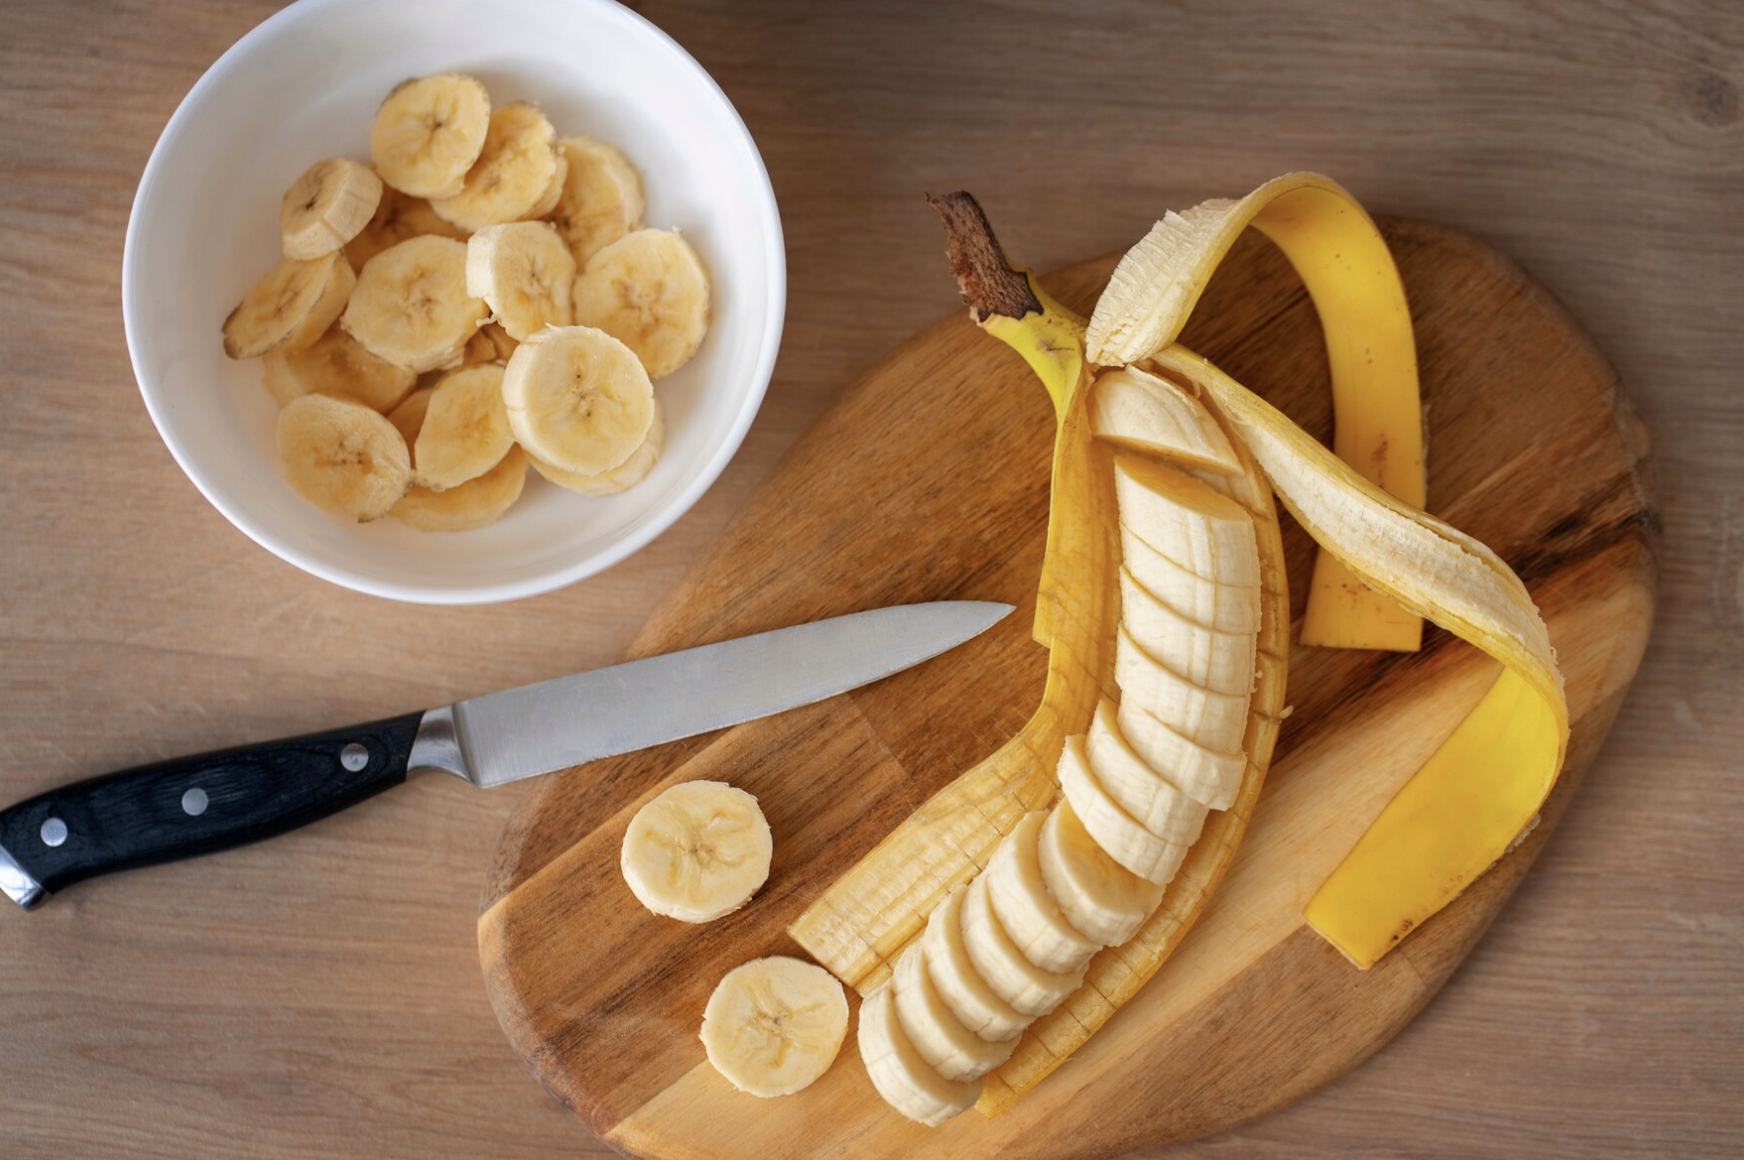 9 Innovative Ways to Use Banana Peels in the Garden